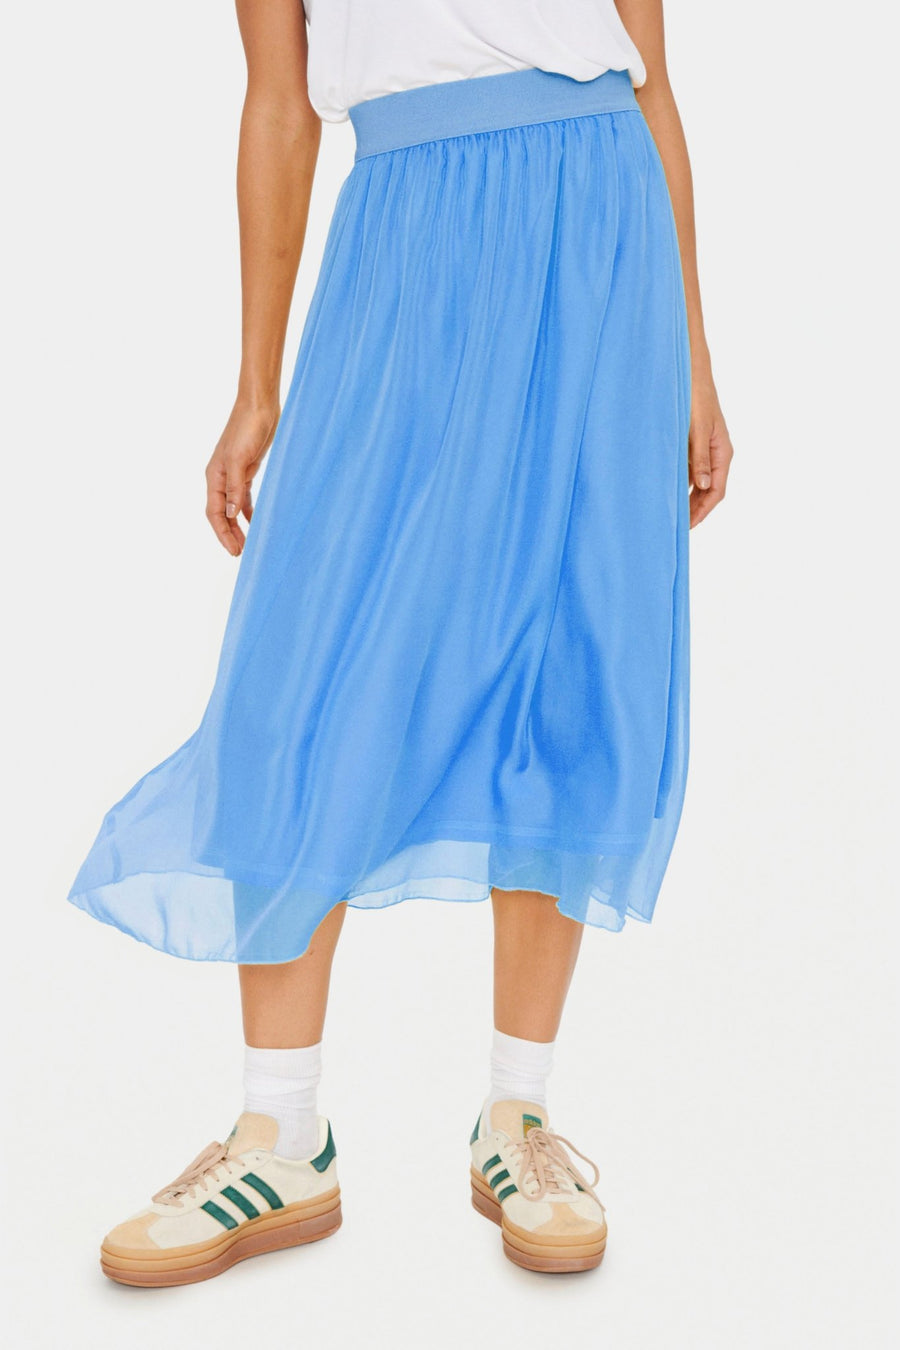 Coral Skirt by Saint Tropez - ultramarine - Blue Sky Fashions & Lingerie